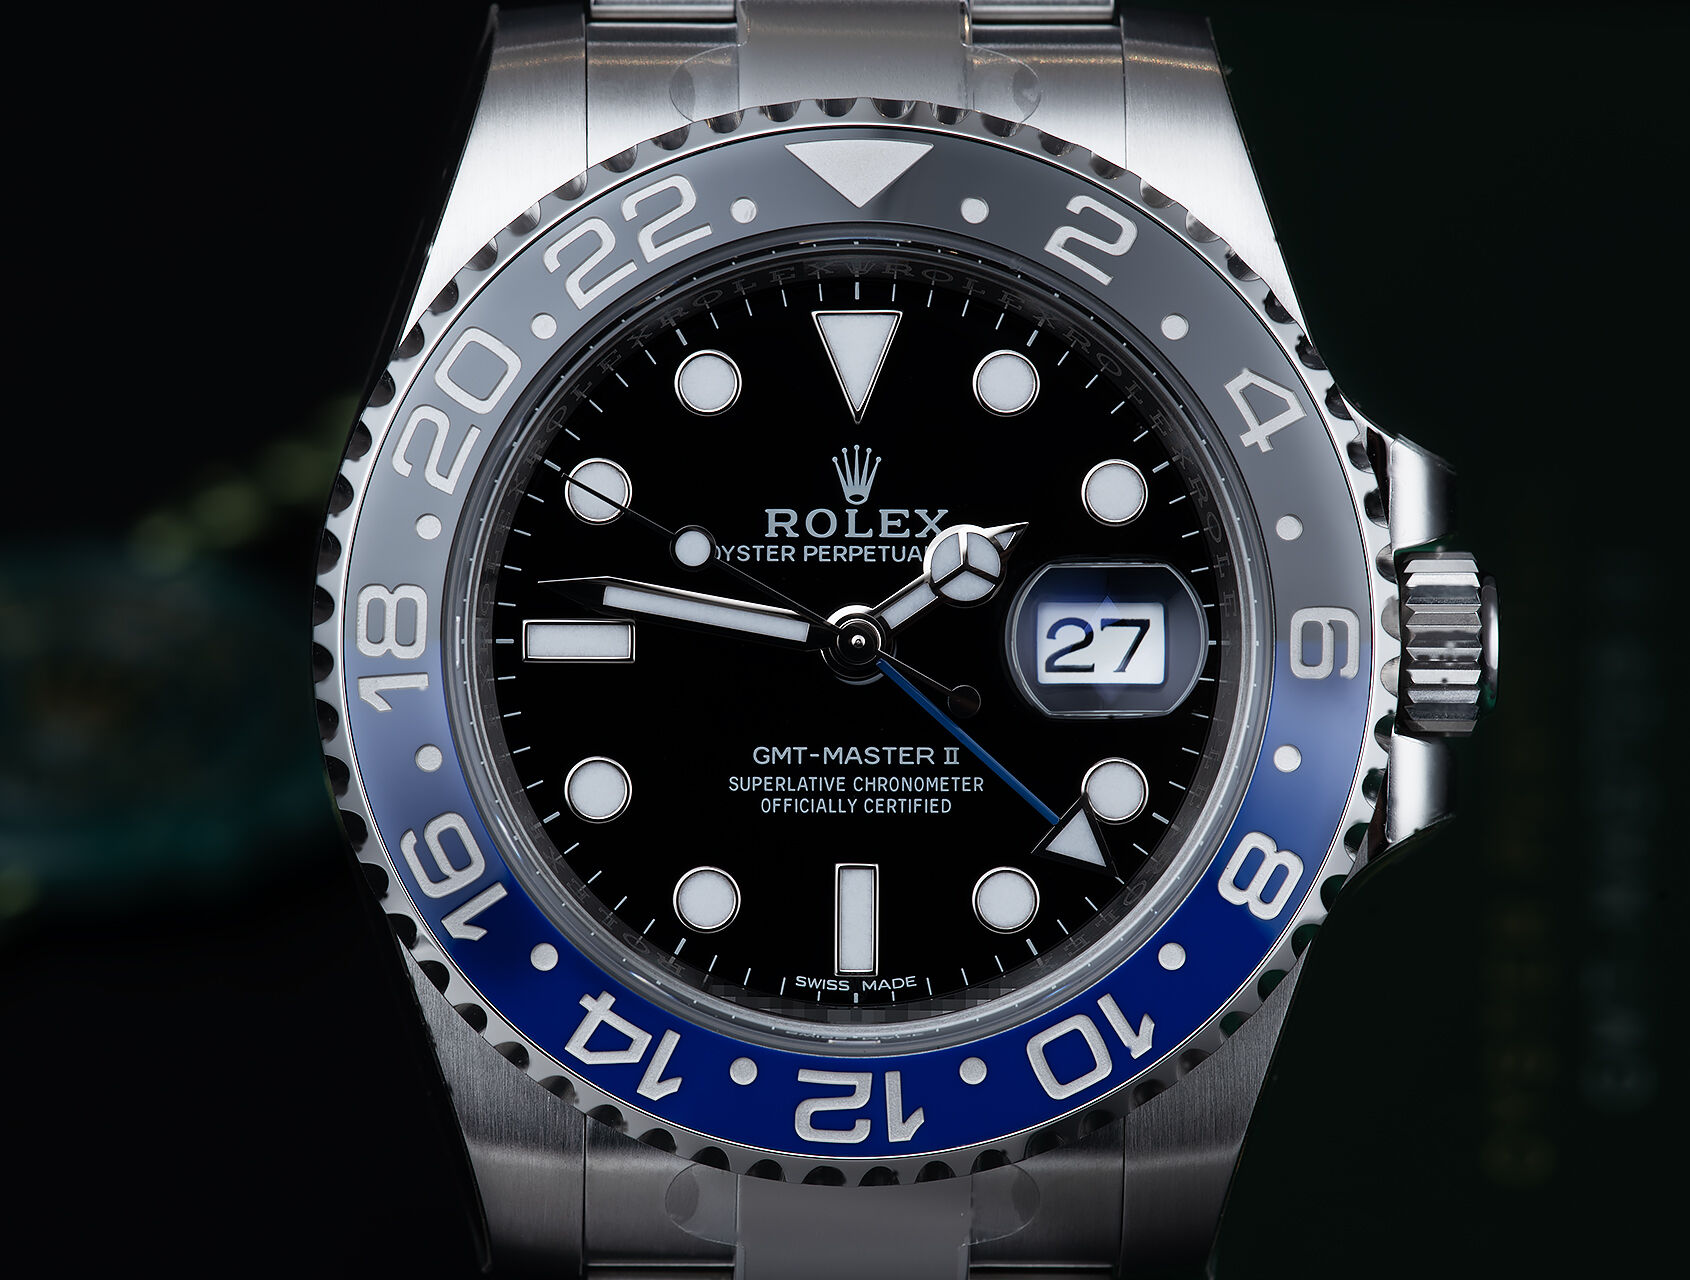 ref 116710BLNR | 116710BLNR - Batman | Rolex GMT-Master II